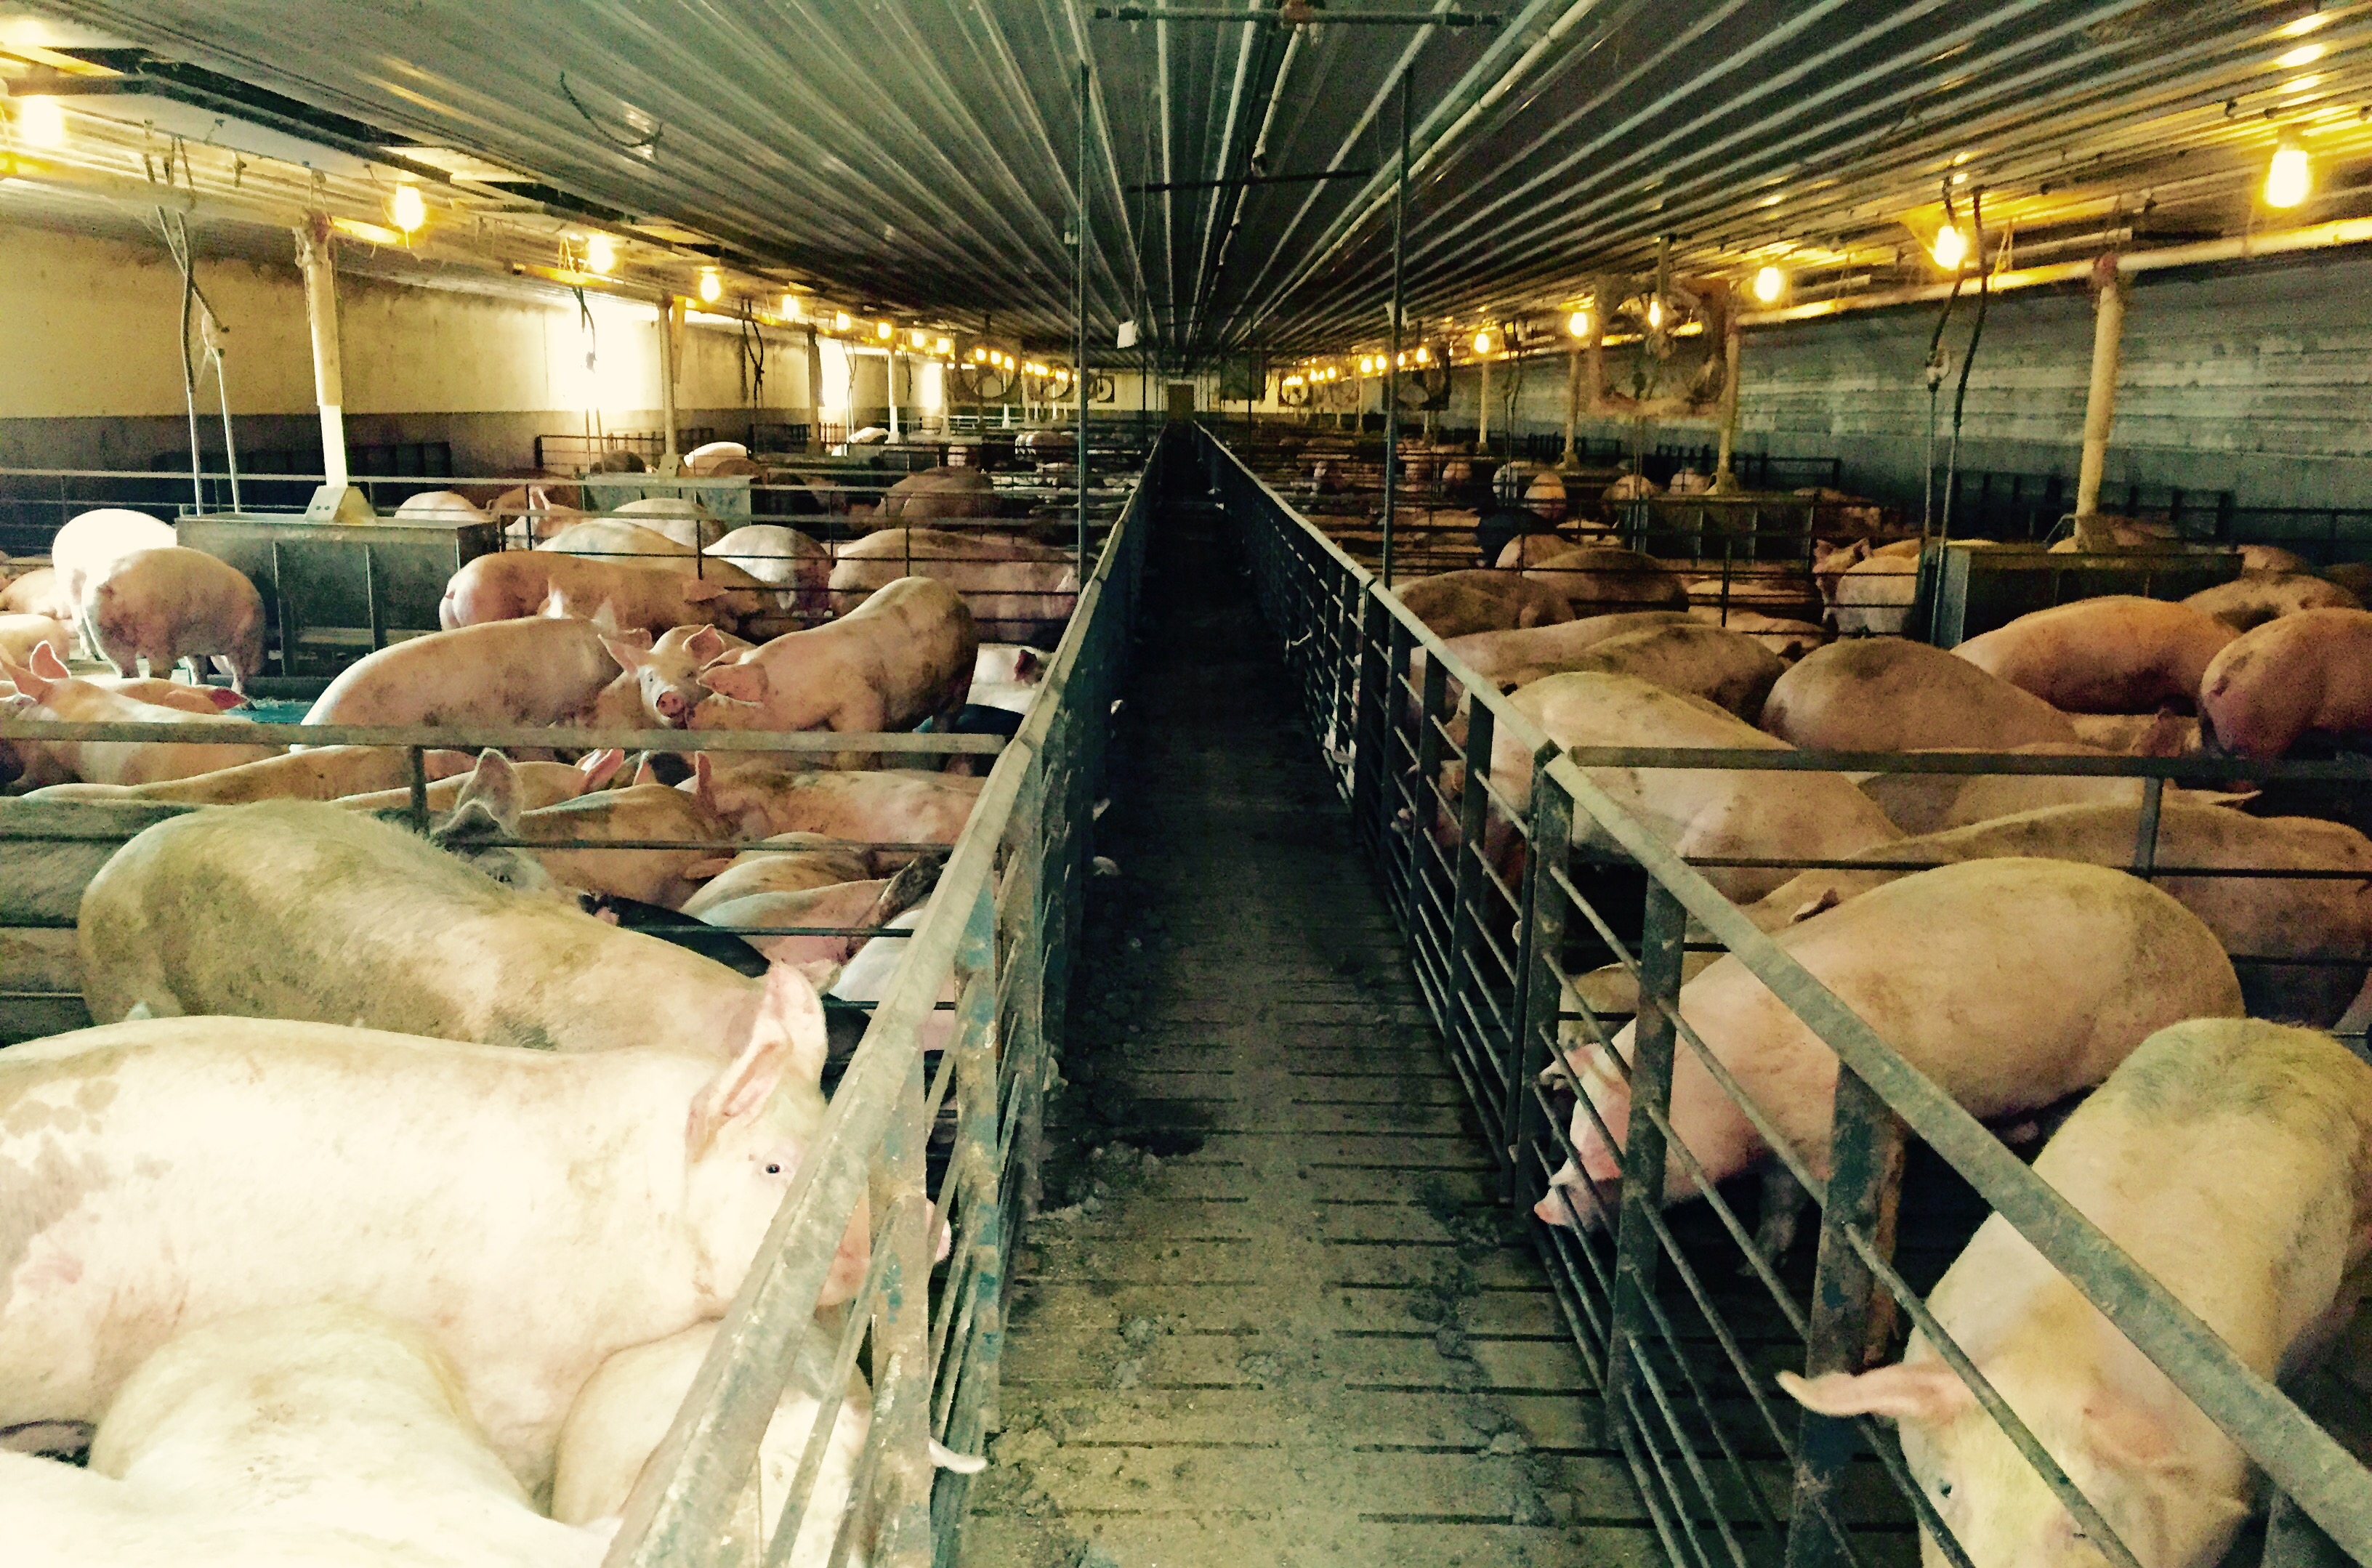 Jerry O'Bryan's farm produces 200,000 market hogs a year.